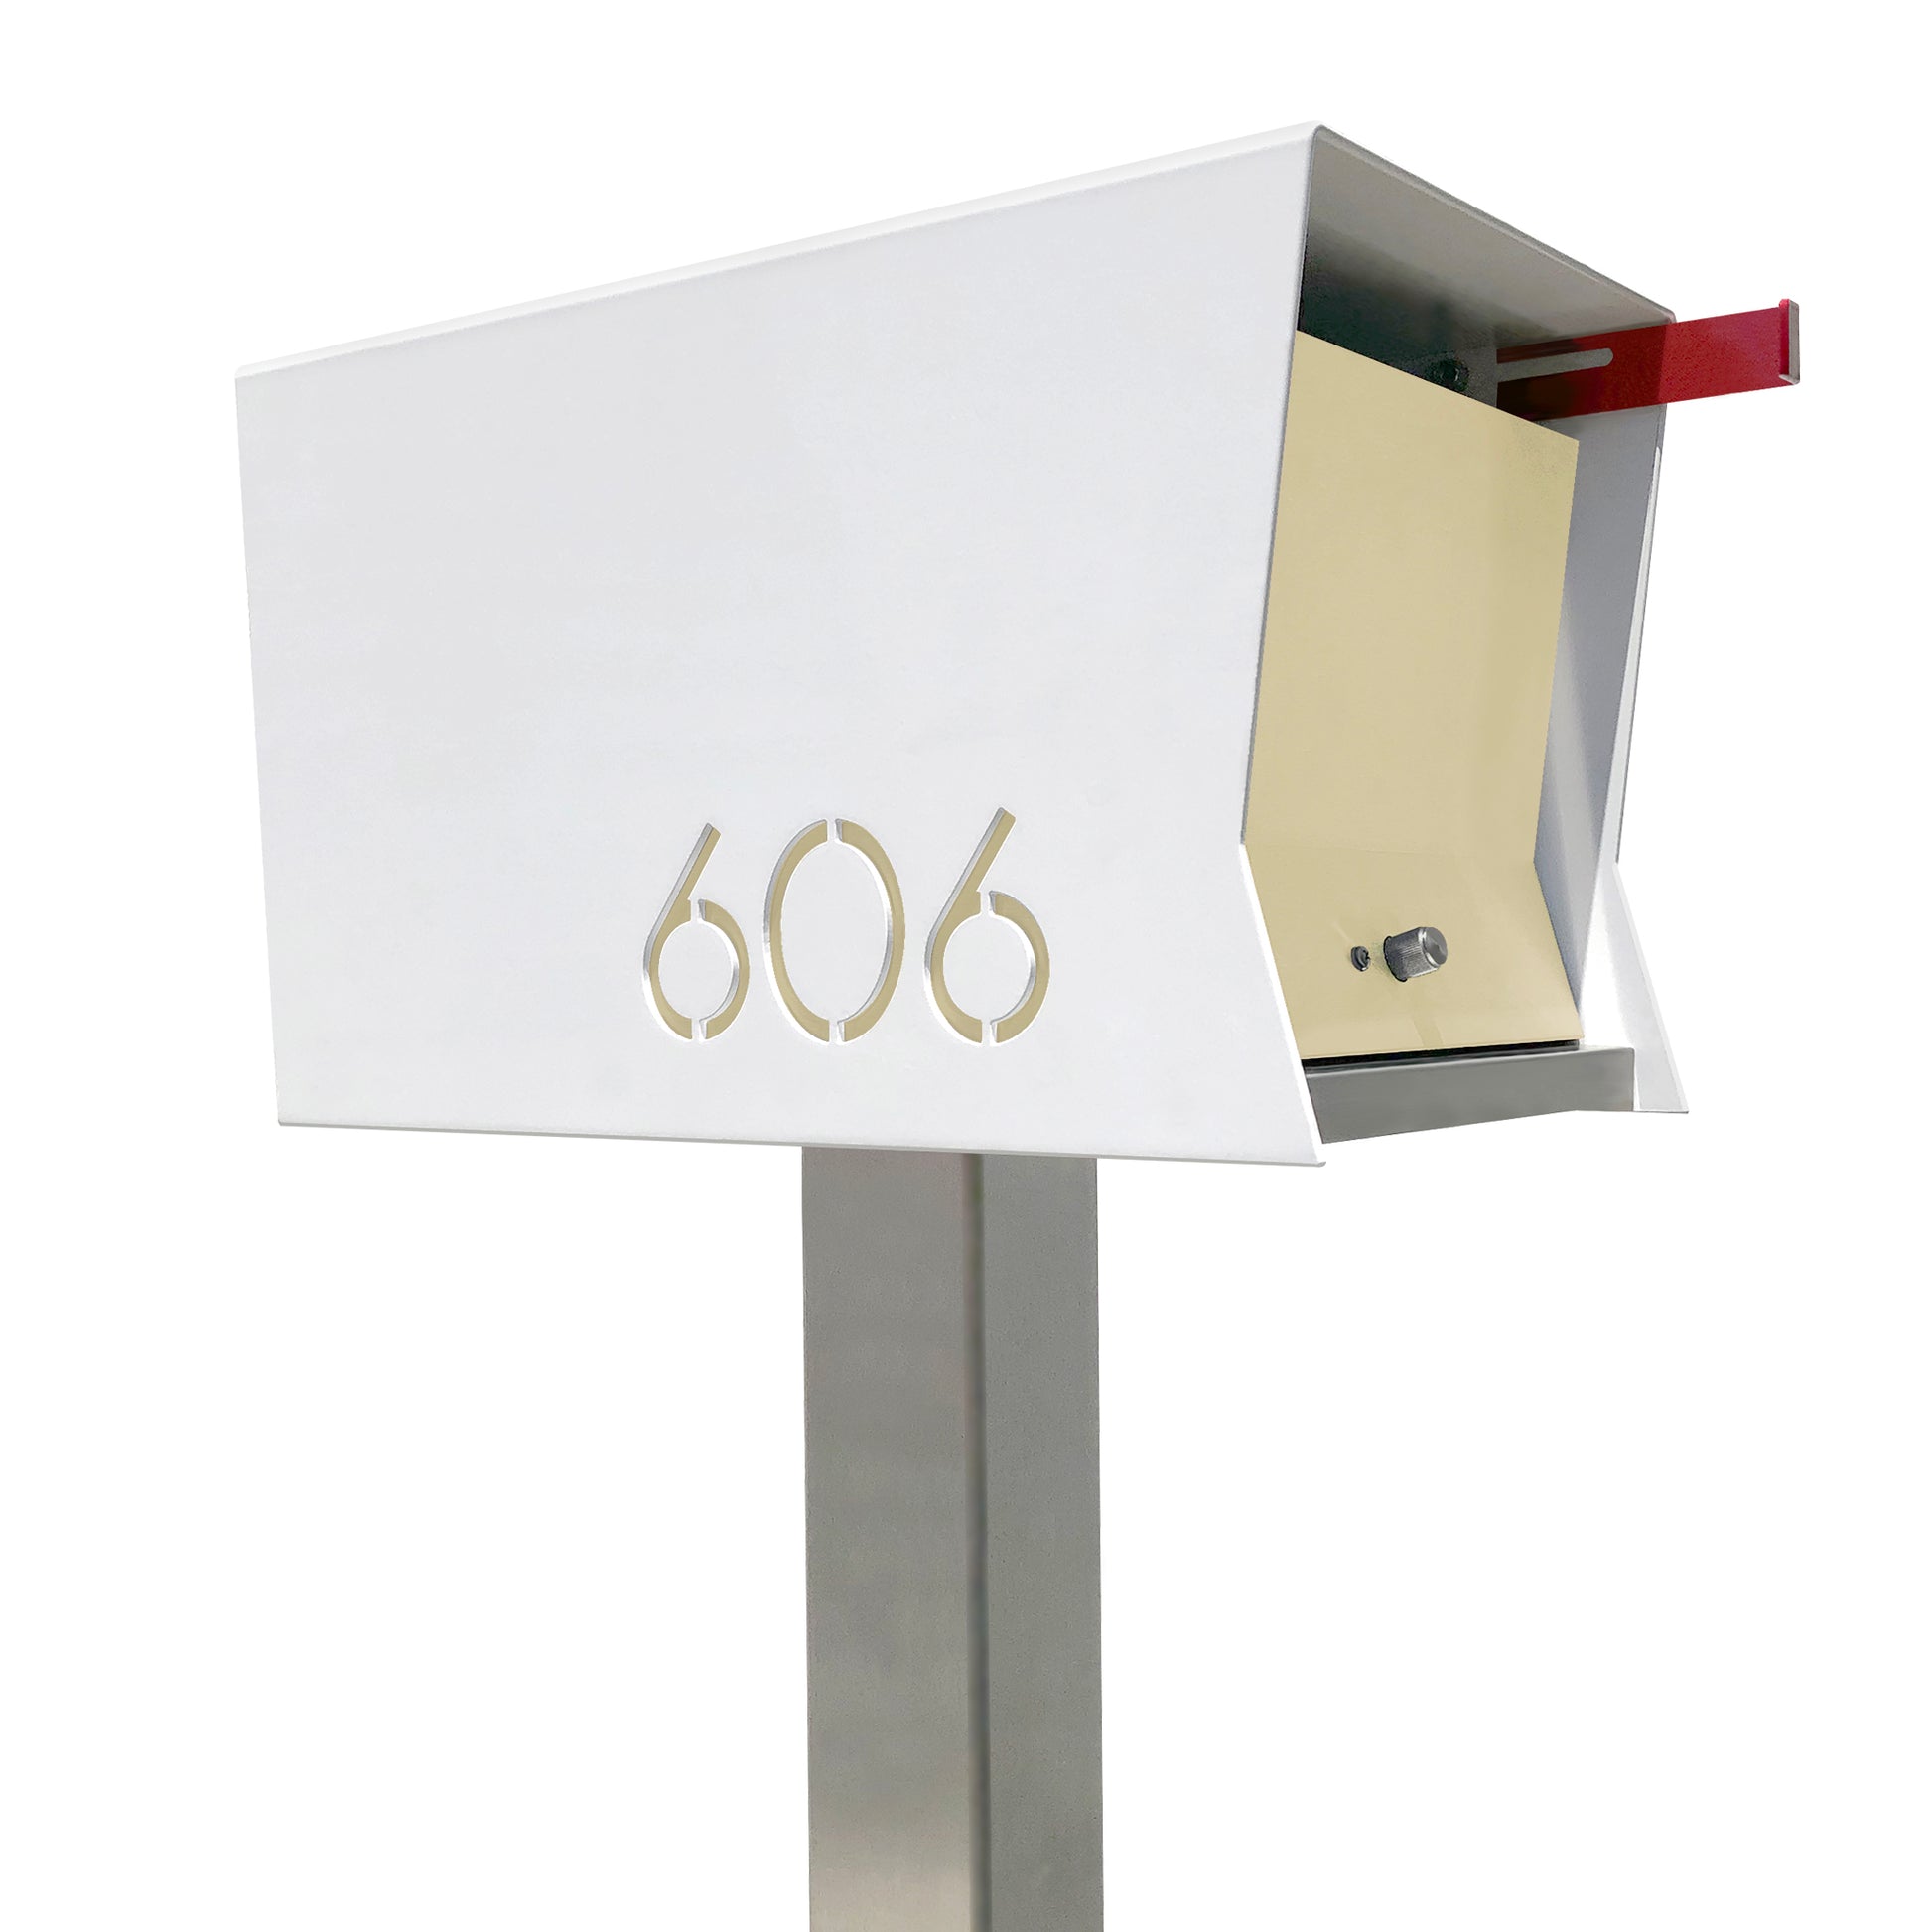 The Original Retrobox in ARCTIC WHITE - Modern Mailbox light brown and white